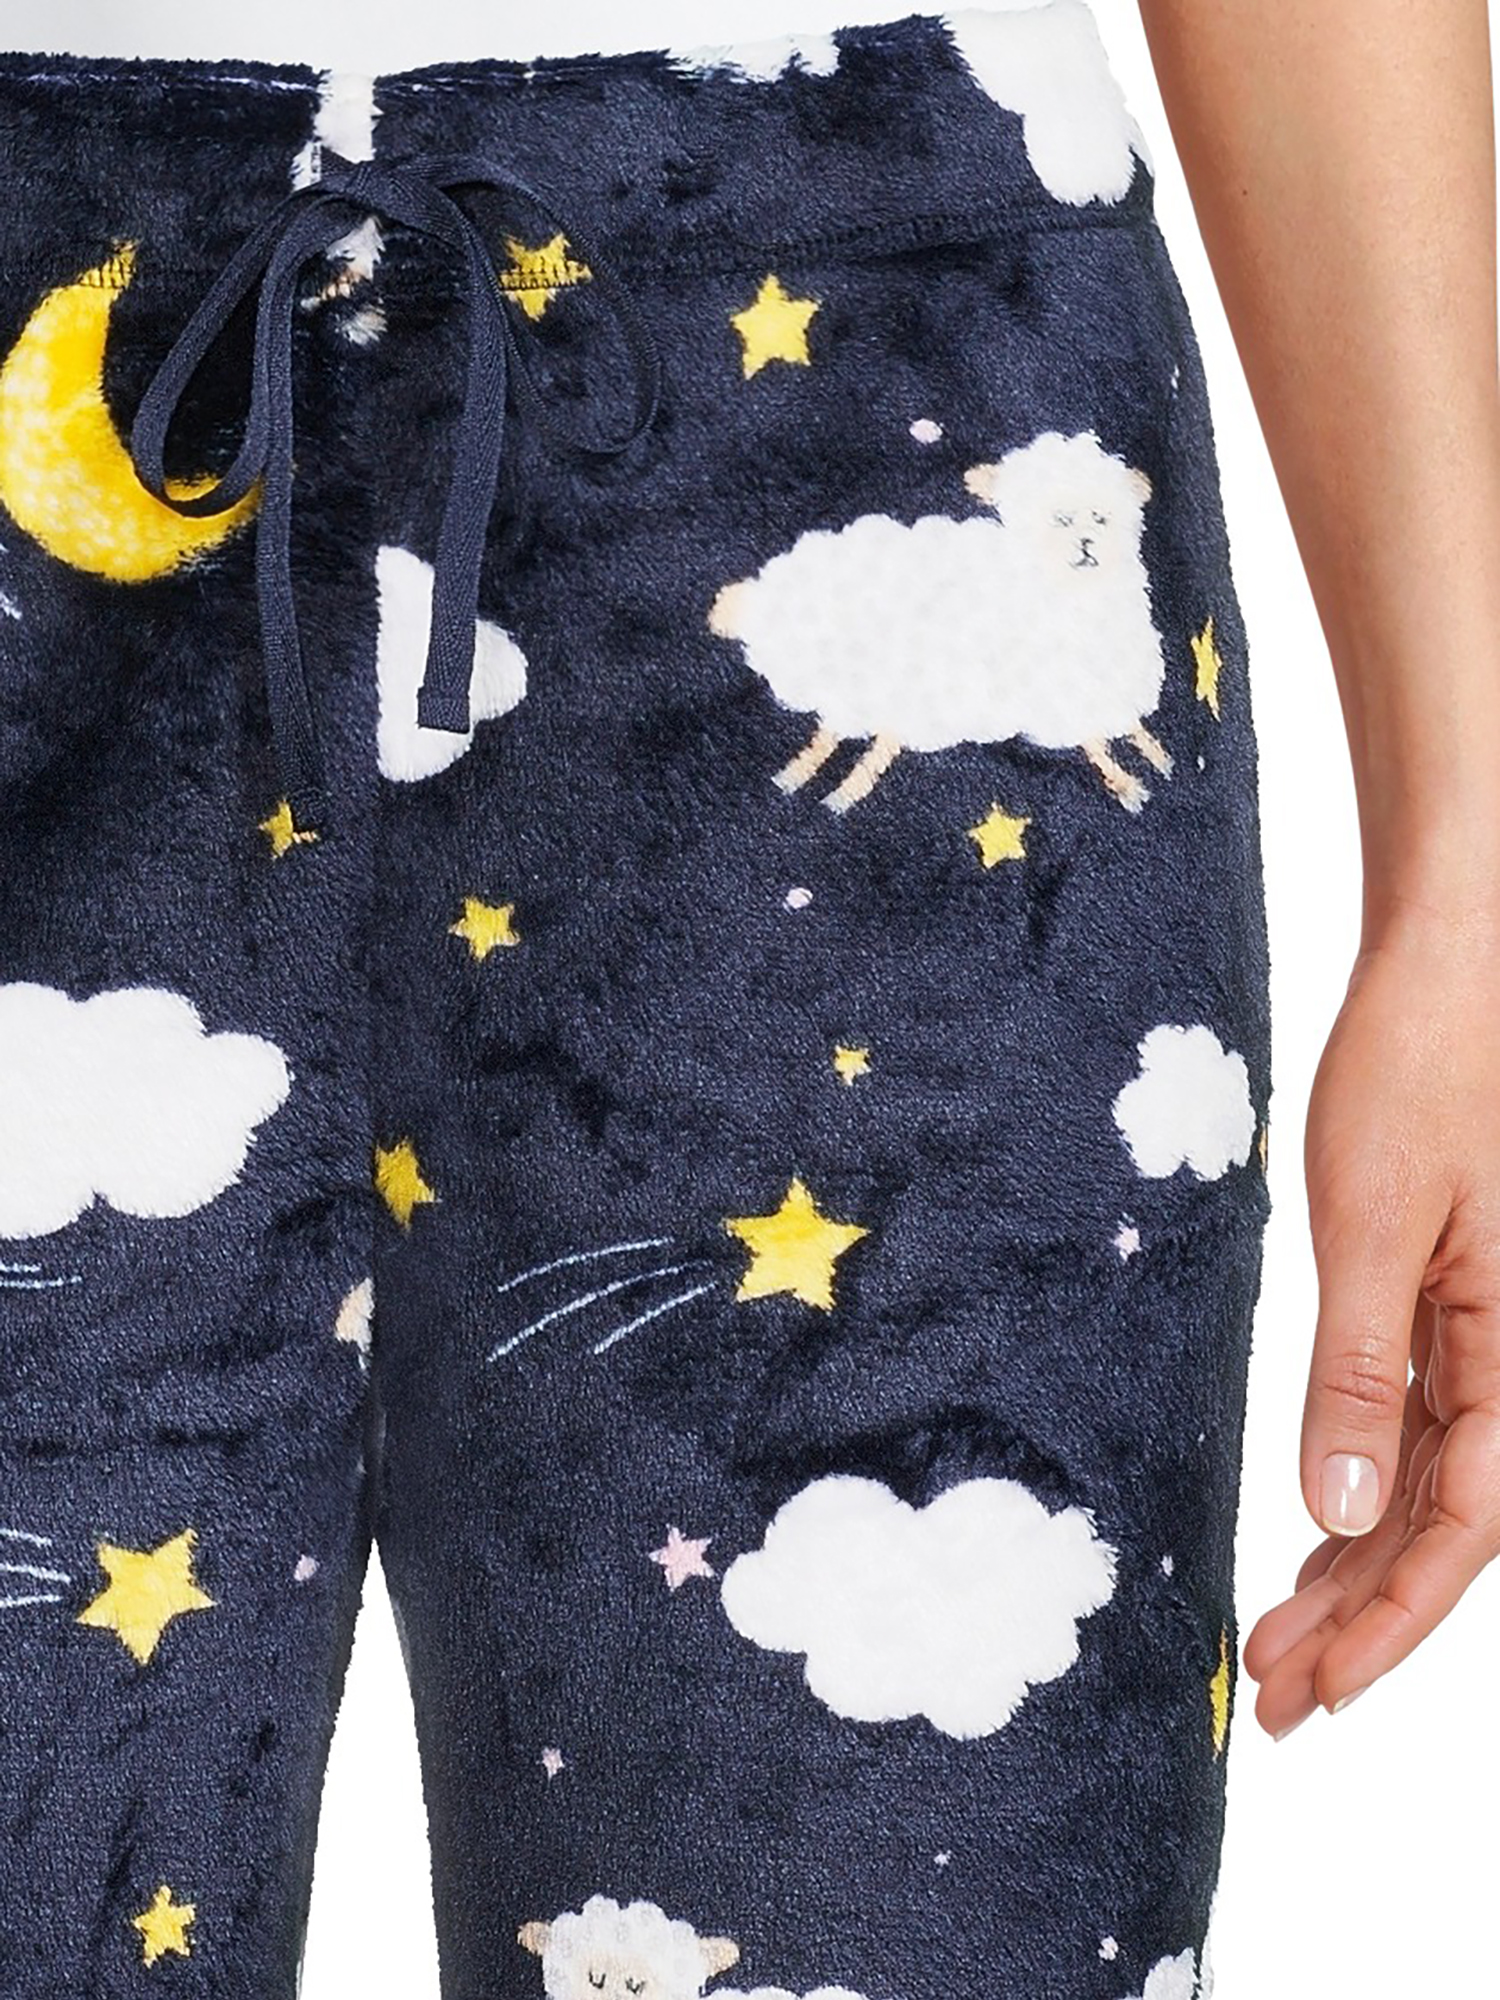 Secret Treasures Women's and Women's Plus Plush Cuffed Pajama Pants - image 5 of 5